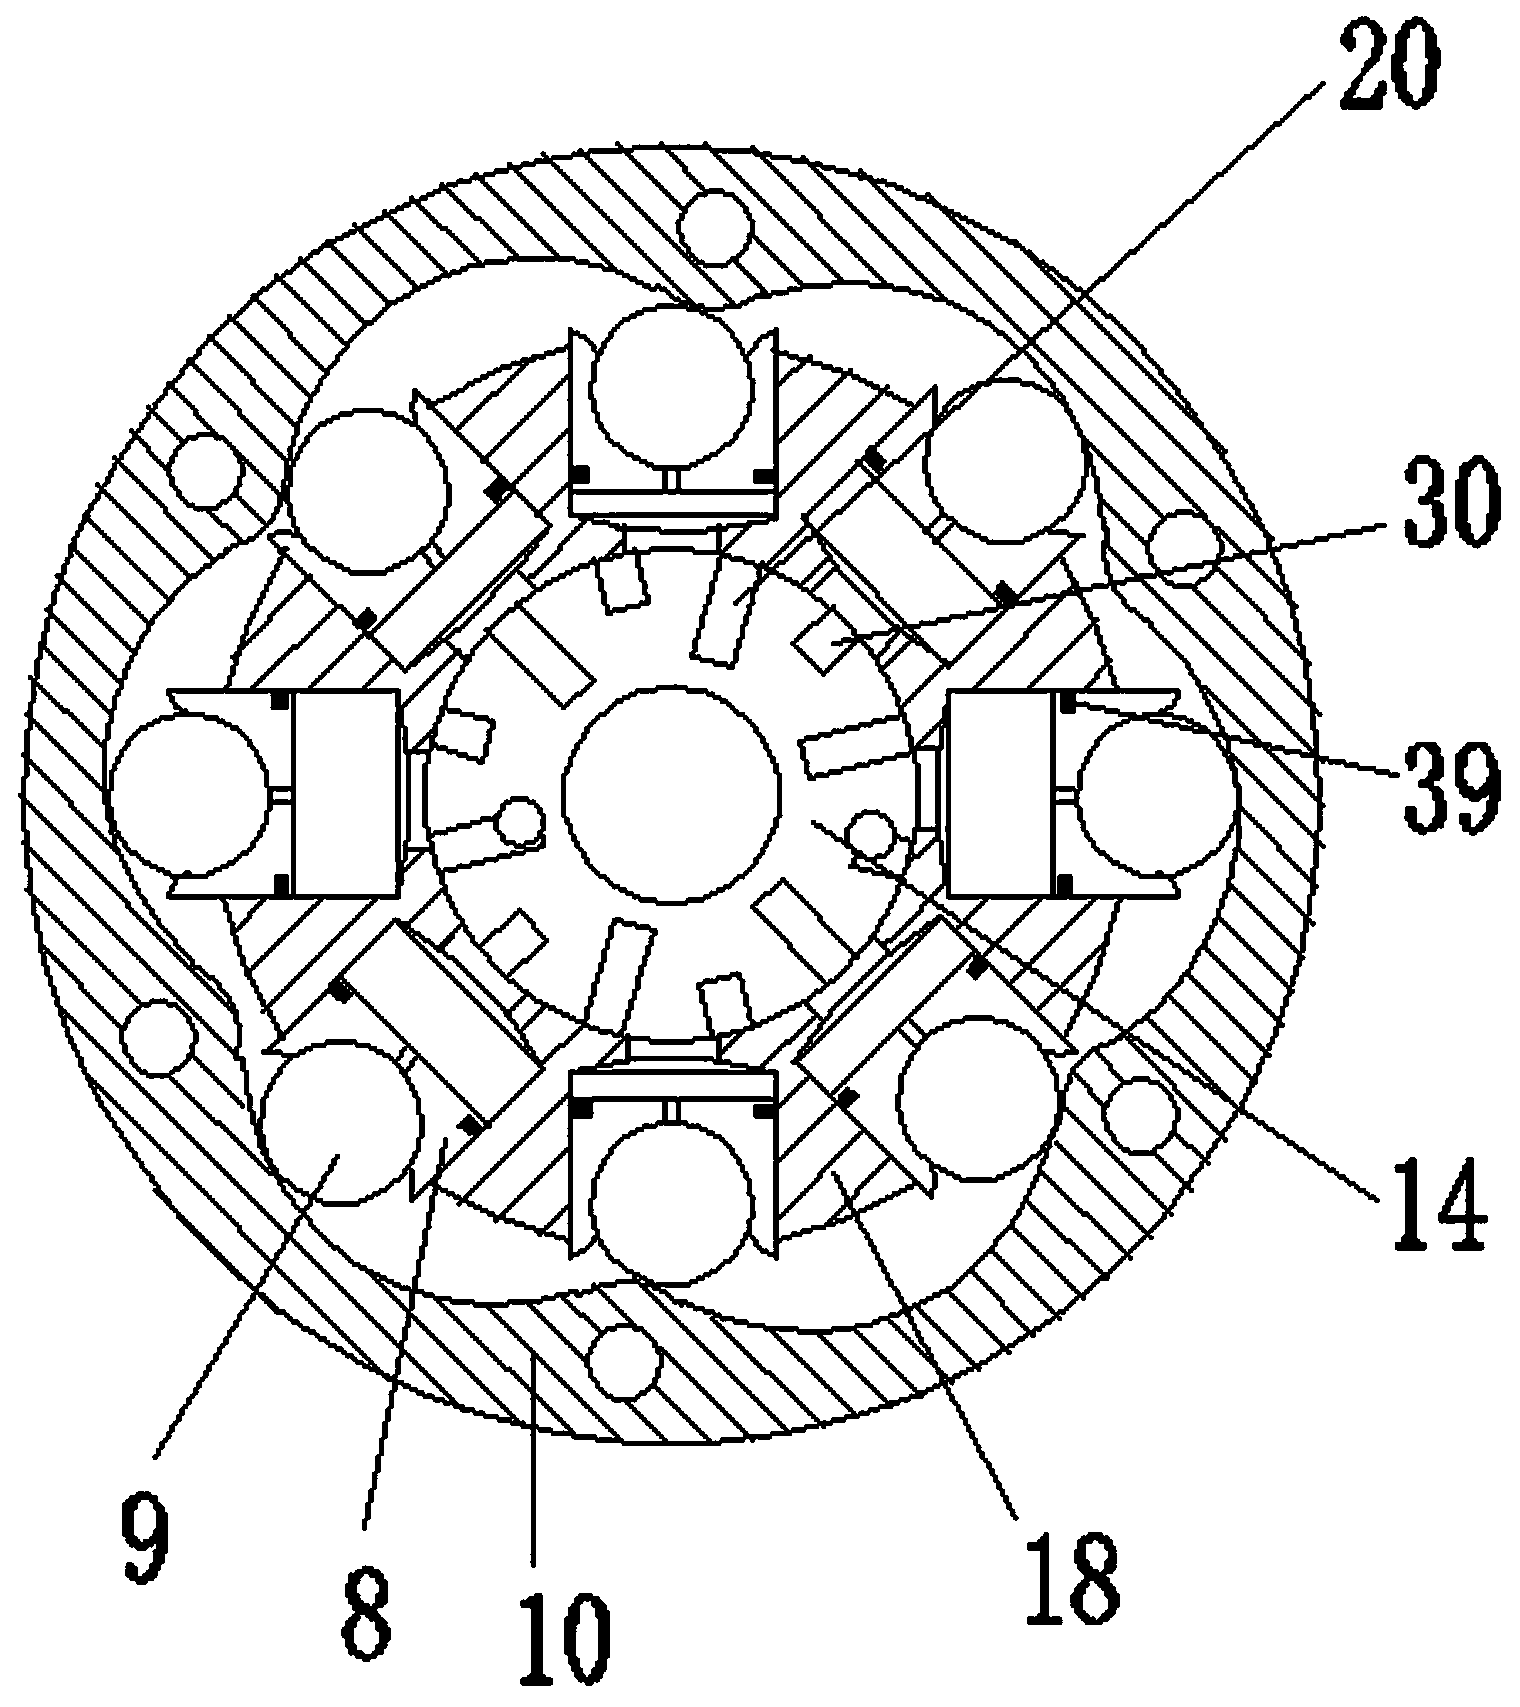 Multi-rotation hydraulic valve